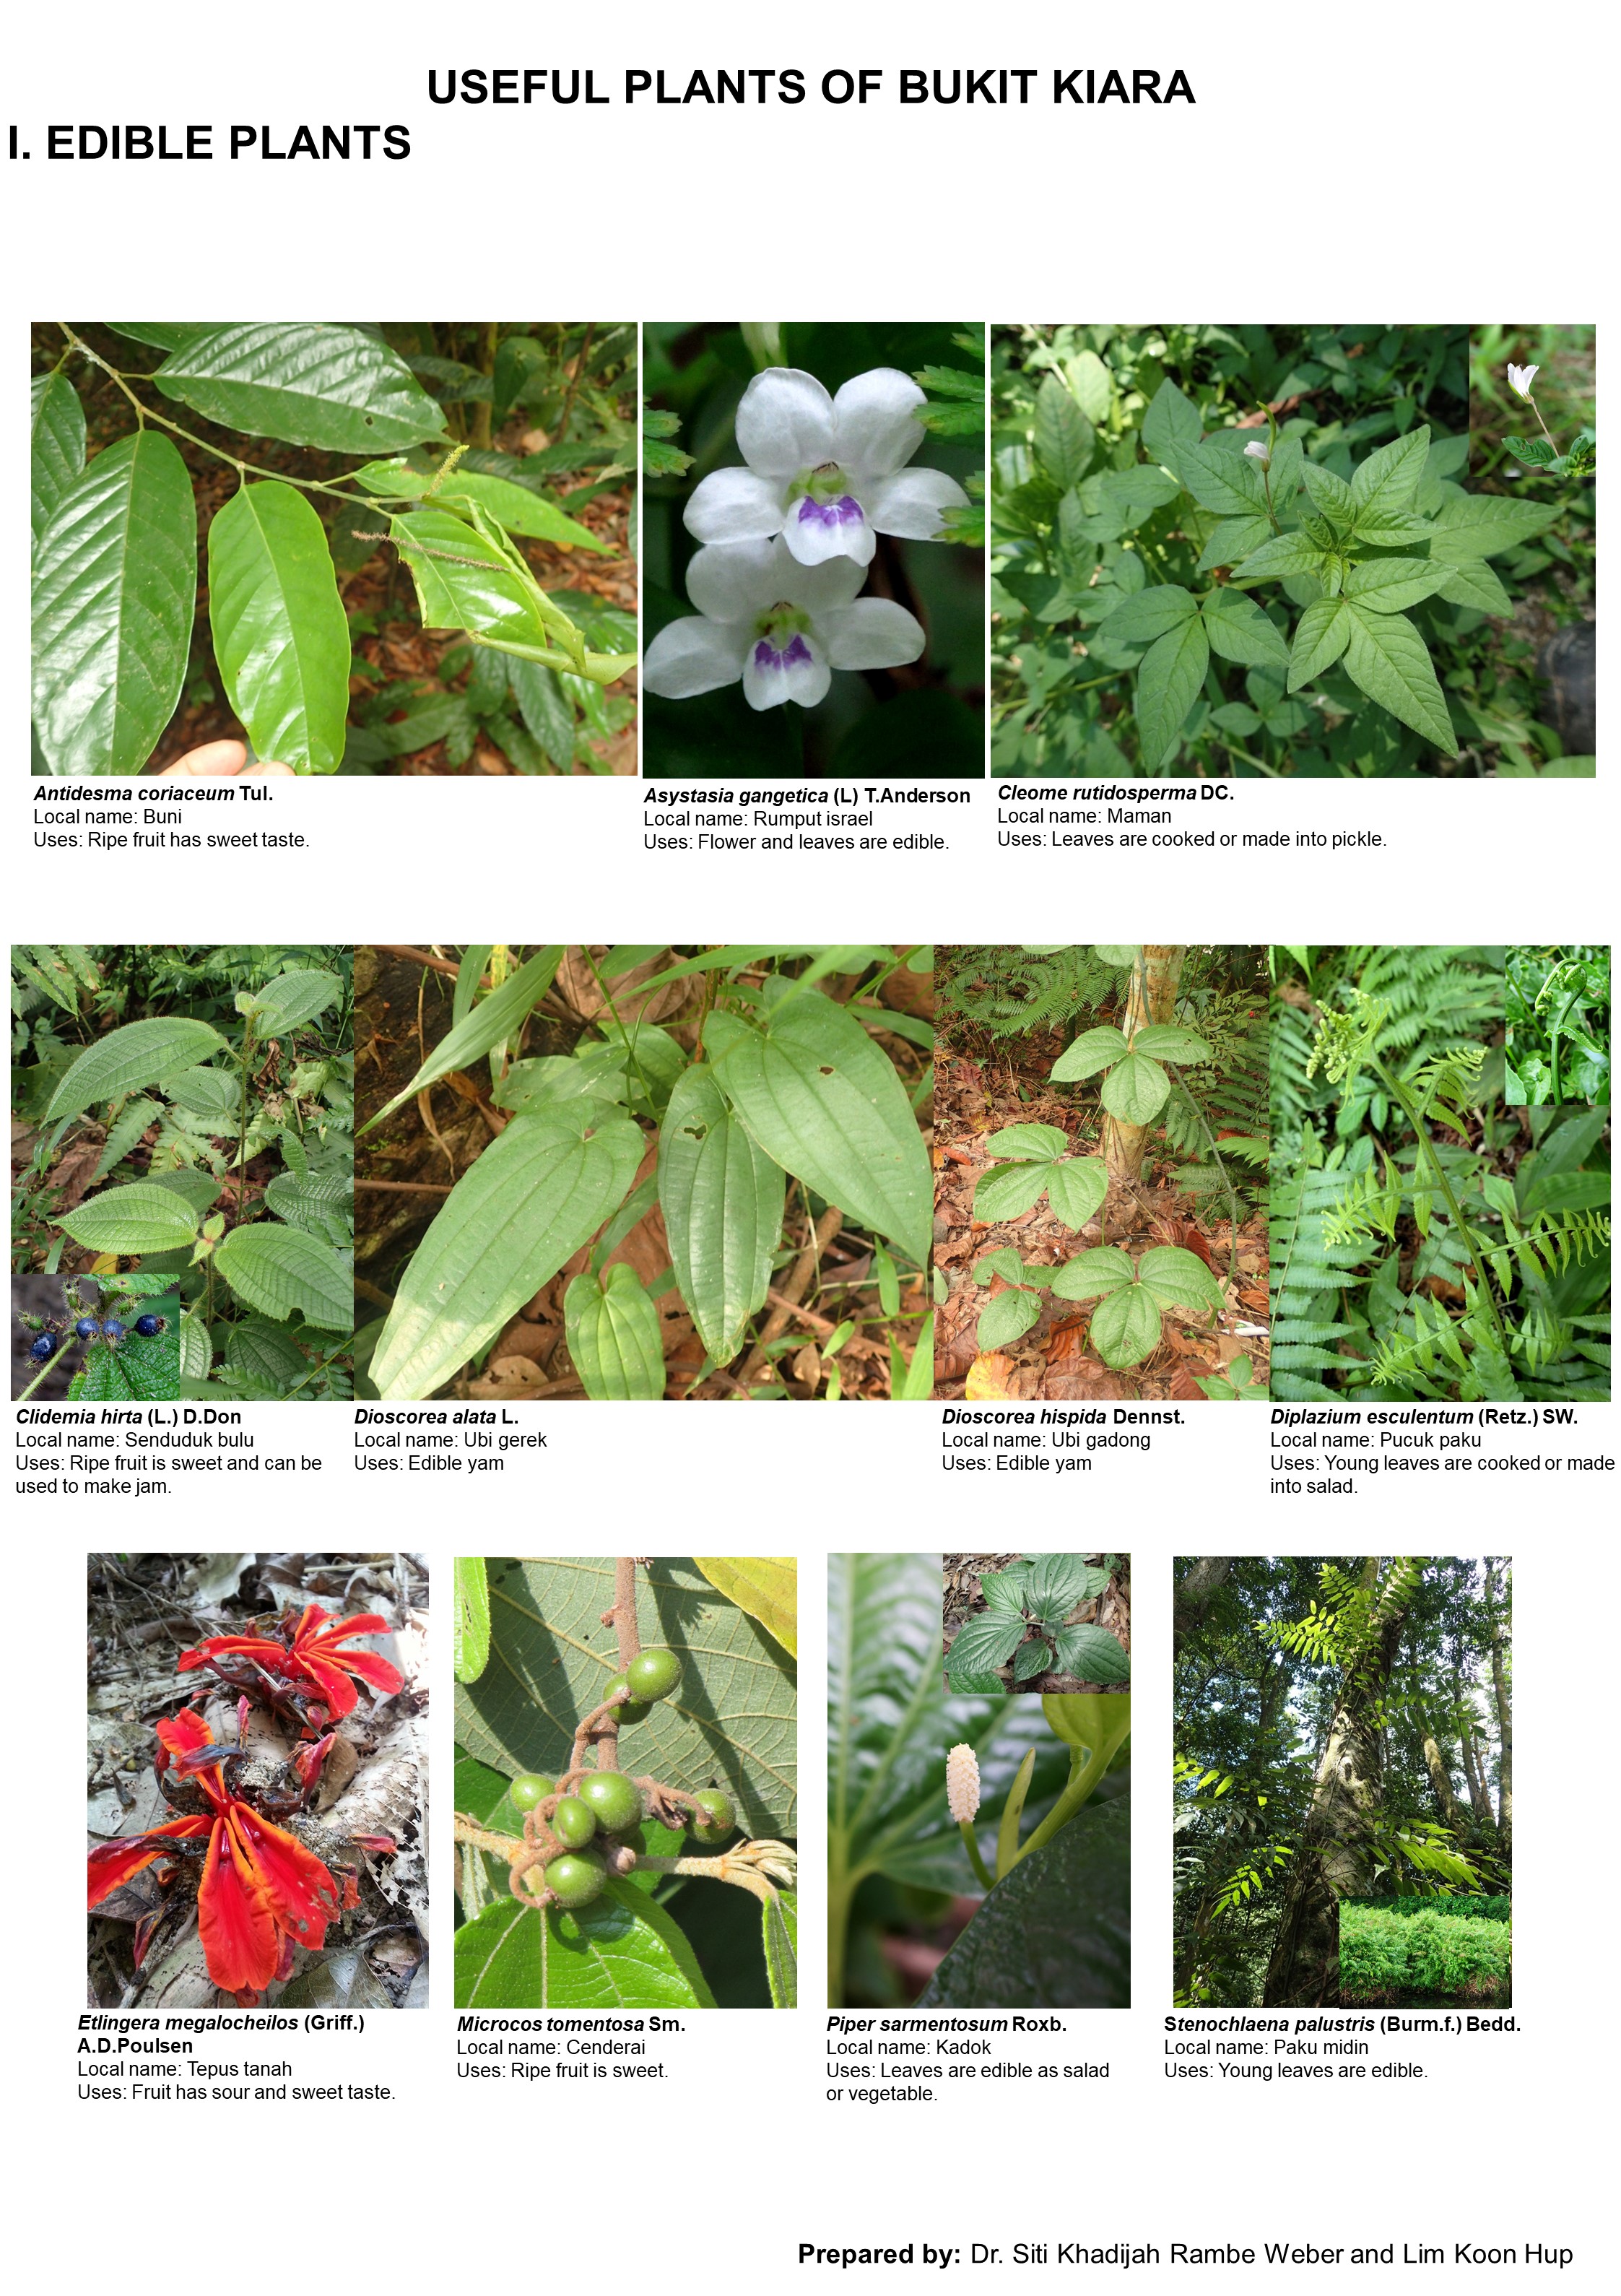 Edible-Useful plants of Bukit Kiara